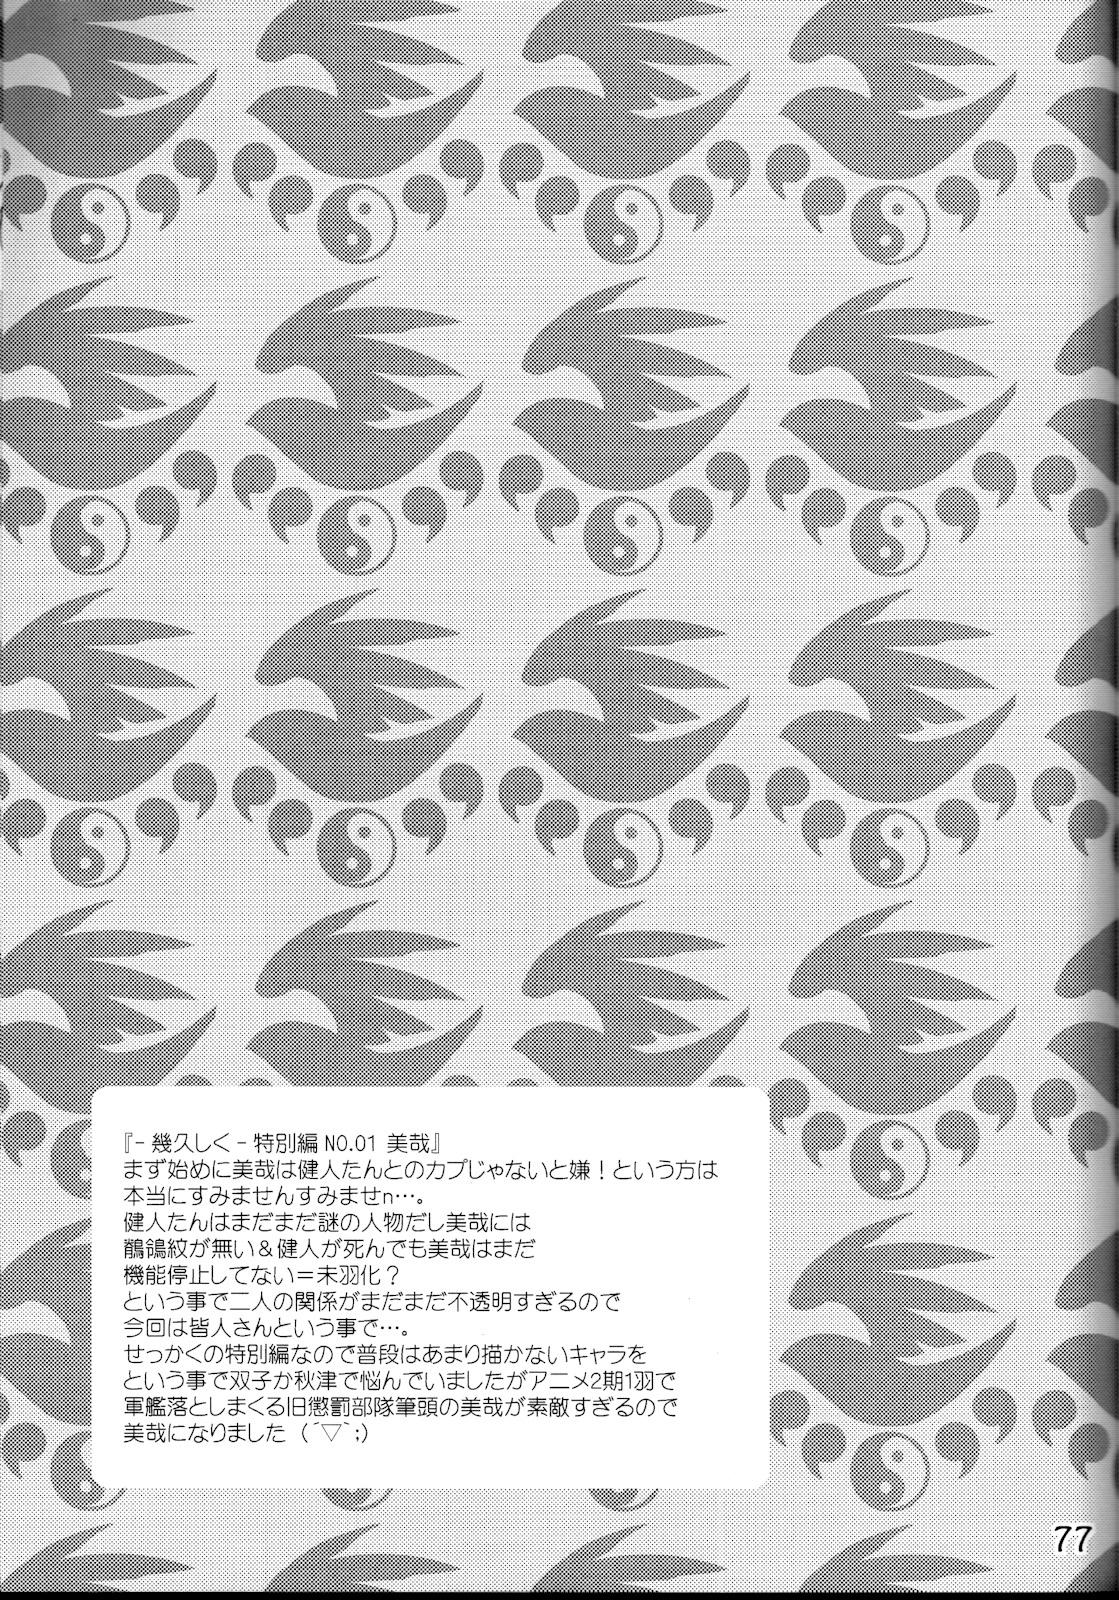 Ikuhisashiku - Honey Bump Sekirei Compilation Book 75